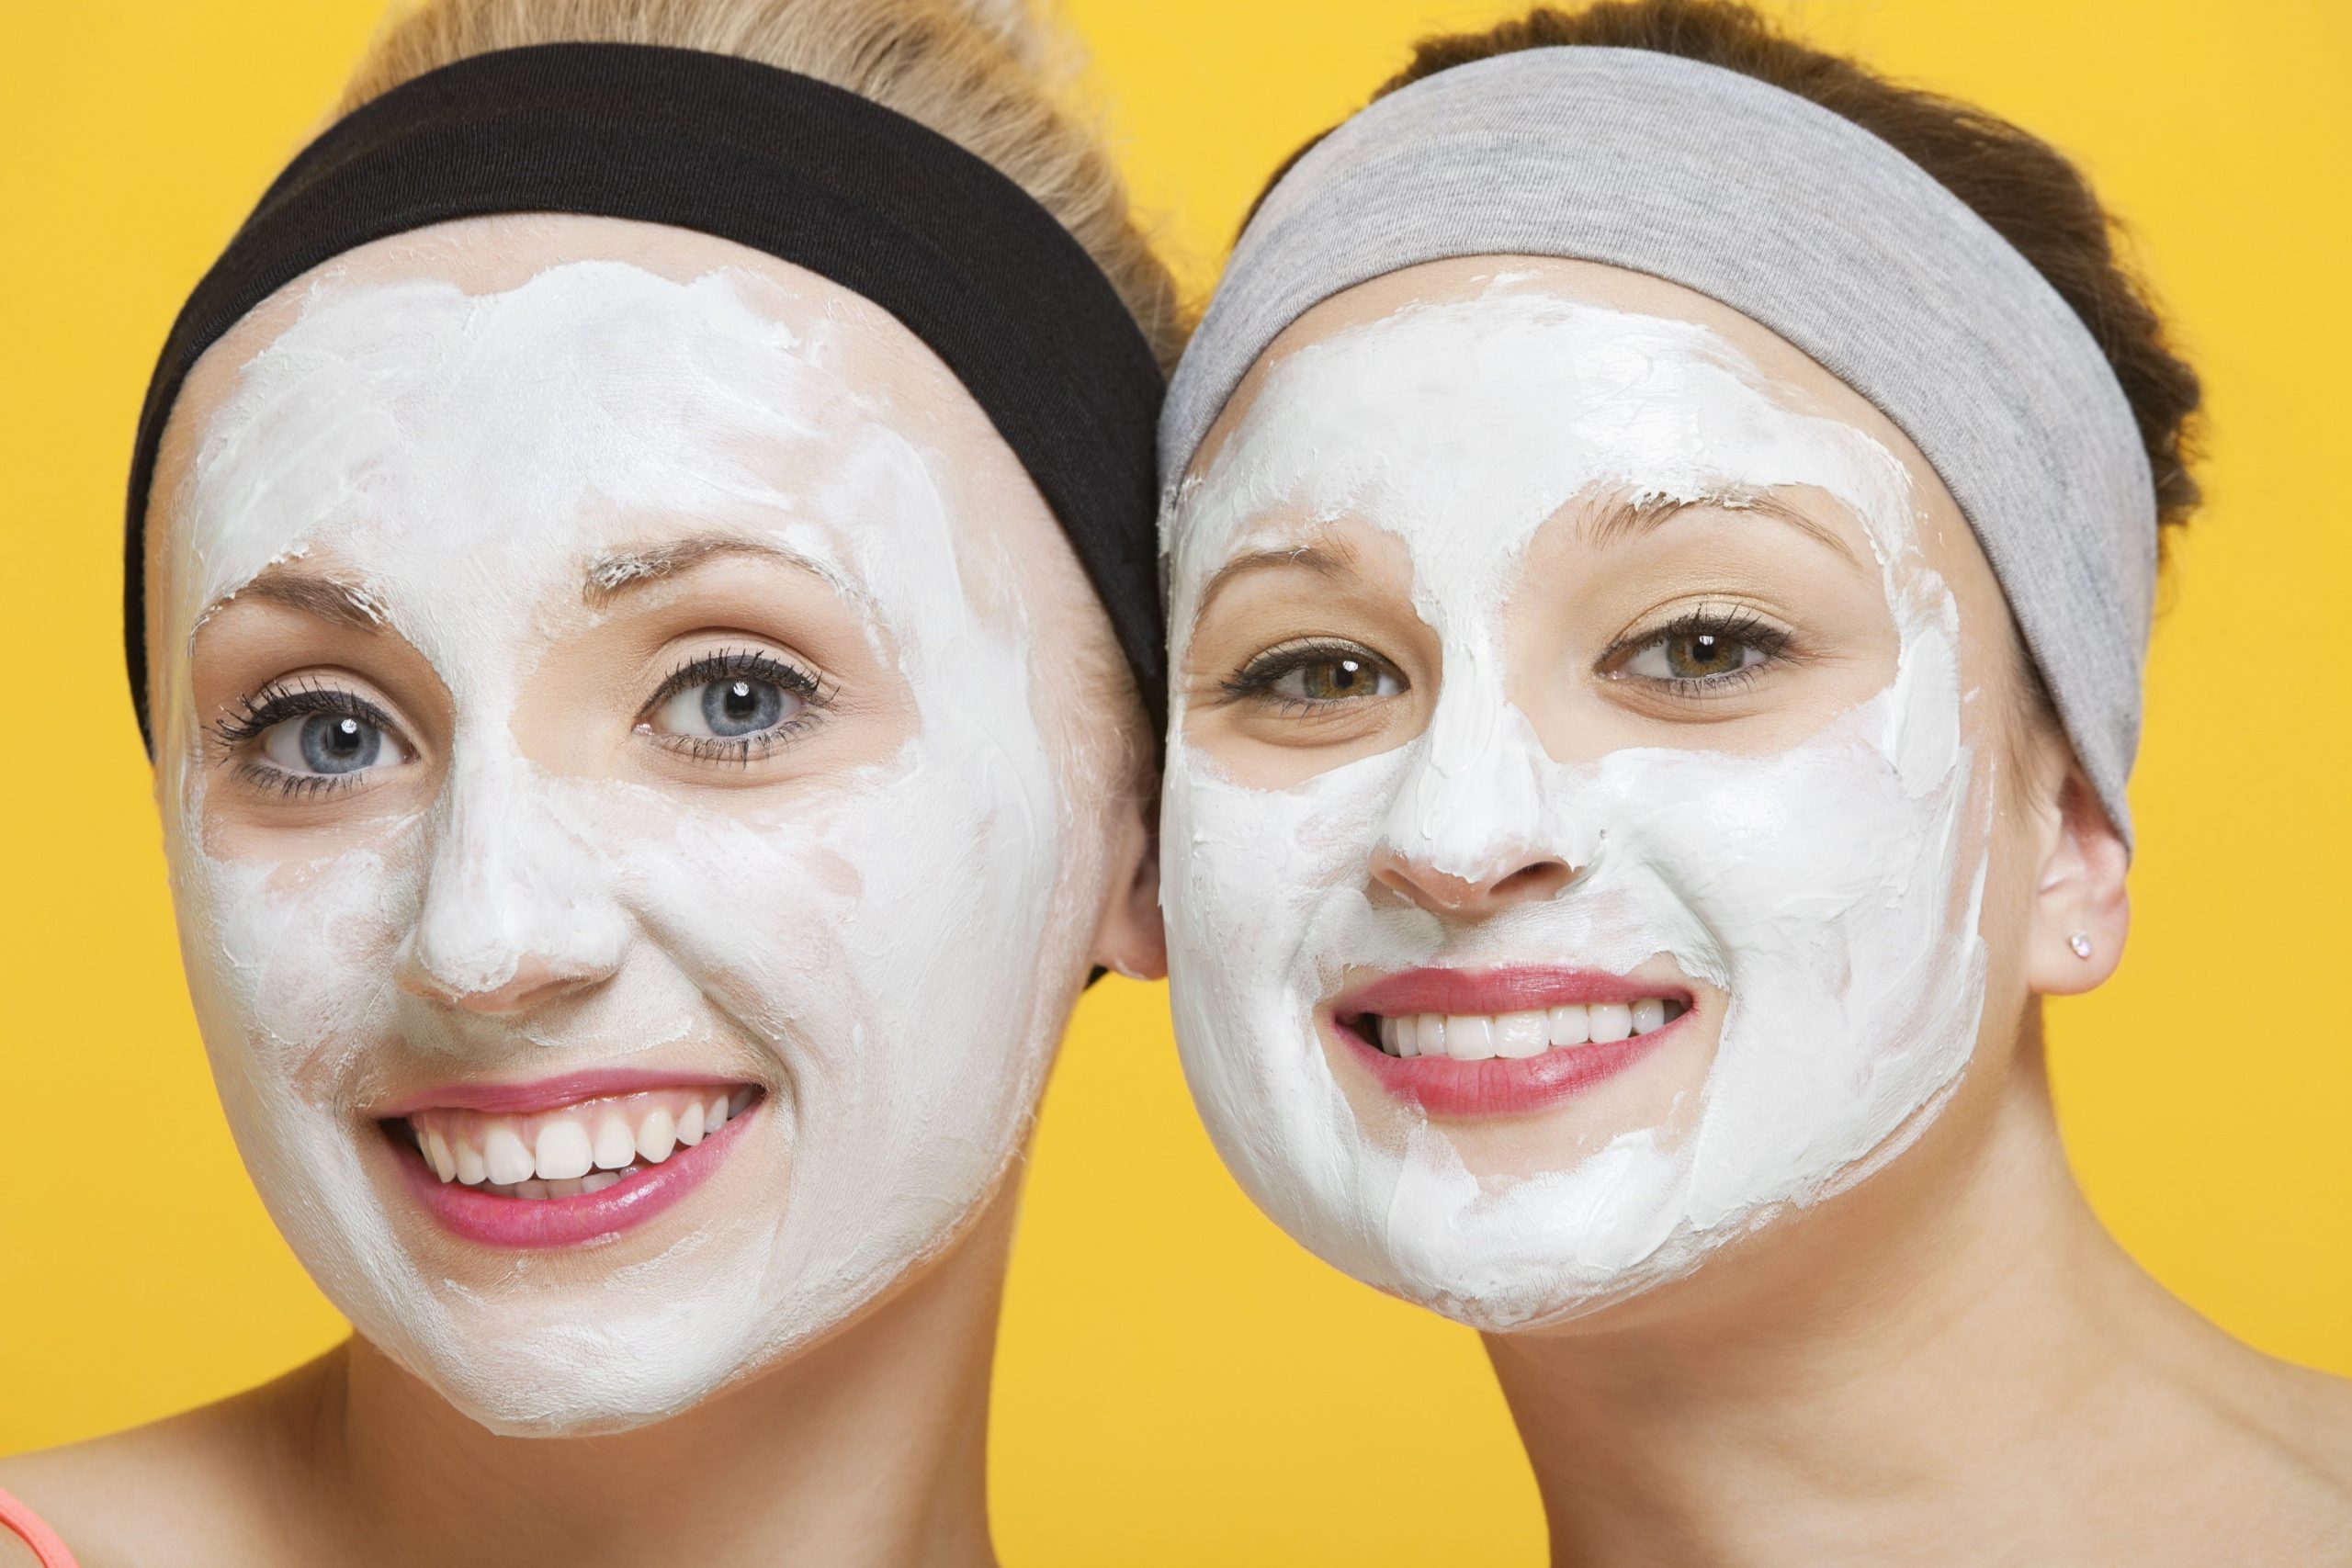 Two recipes for homemade moisturizing masks